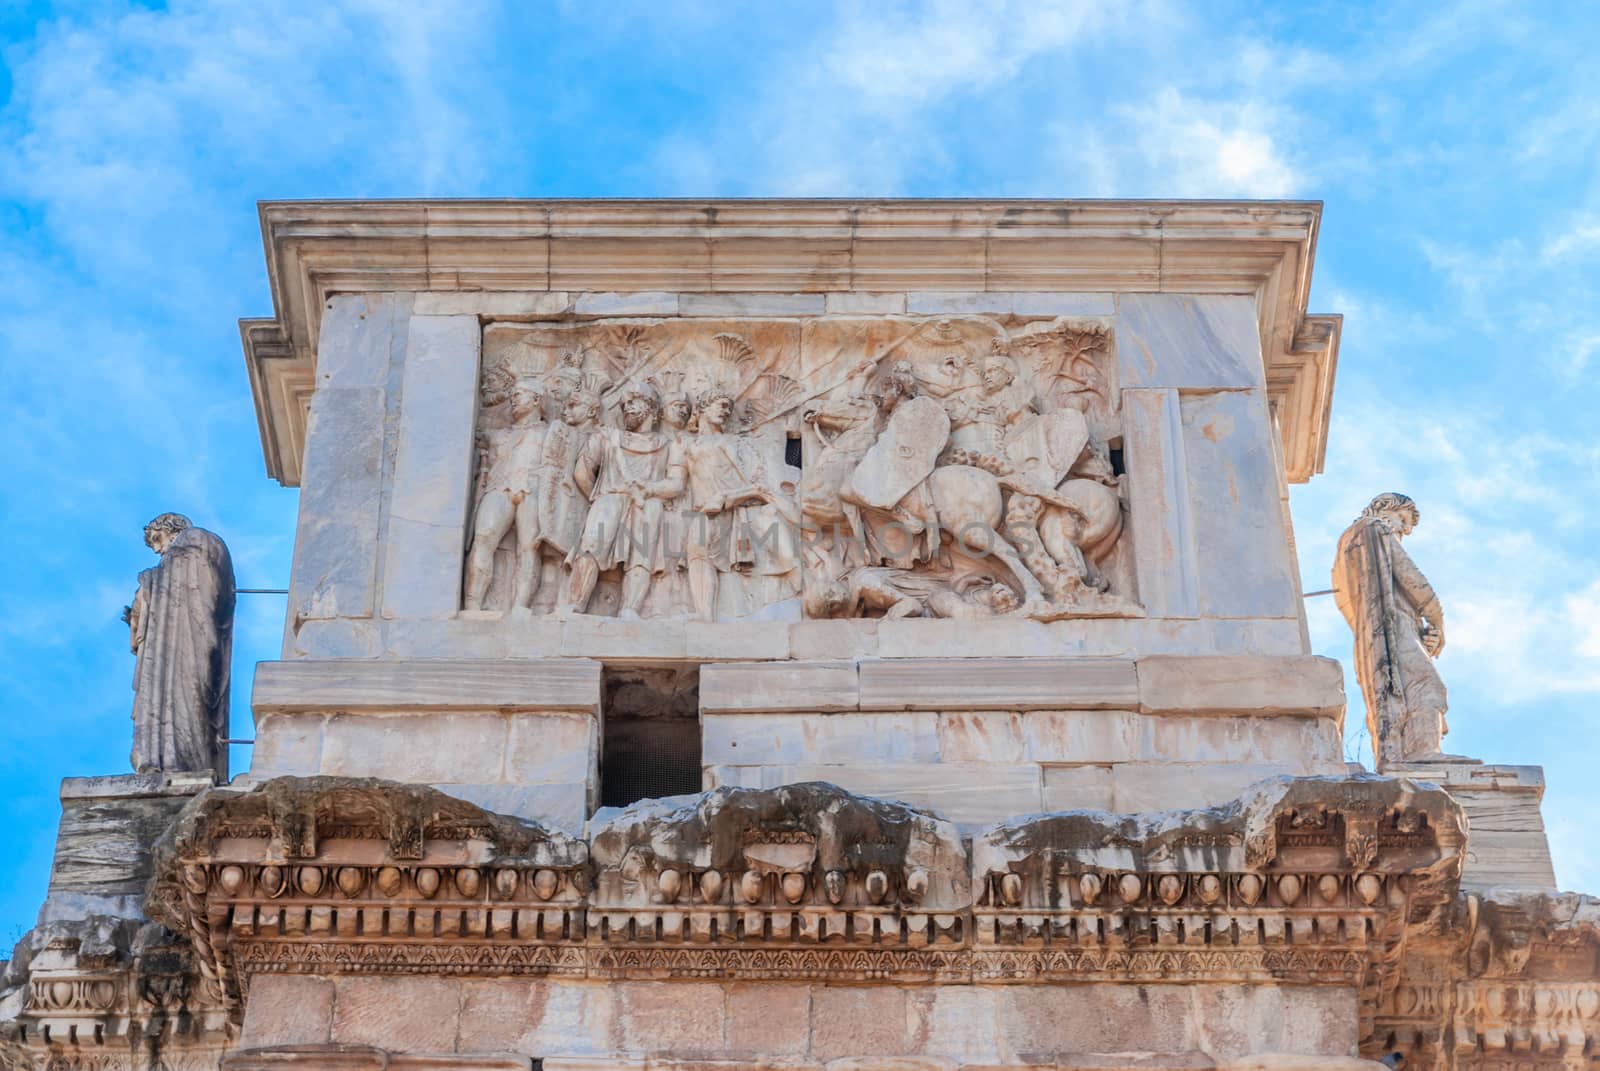 Arch of Constantine or Arco di Costantino or Triumphal arch in Rome, Italy near Coliseum.